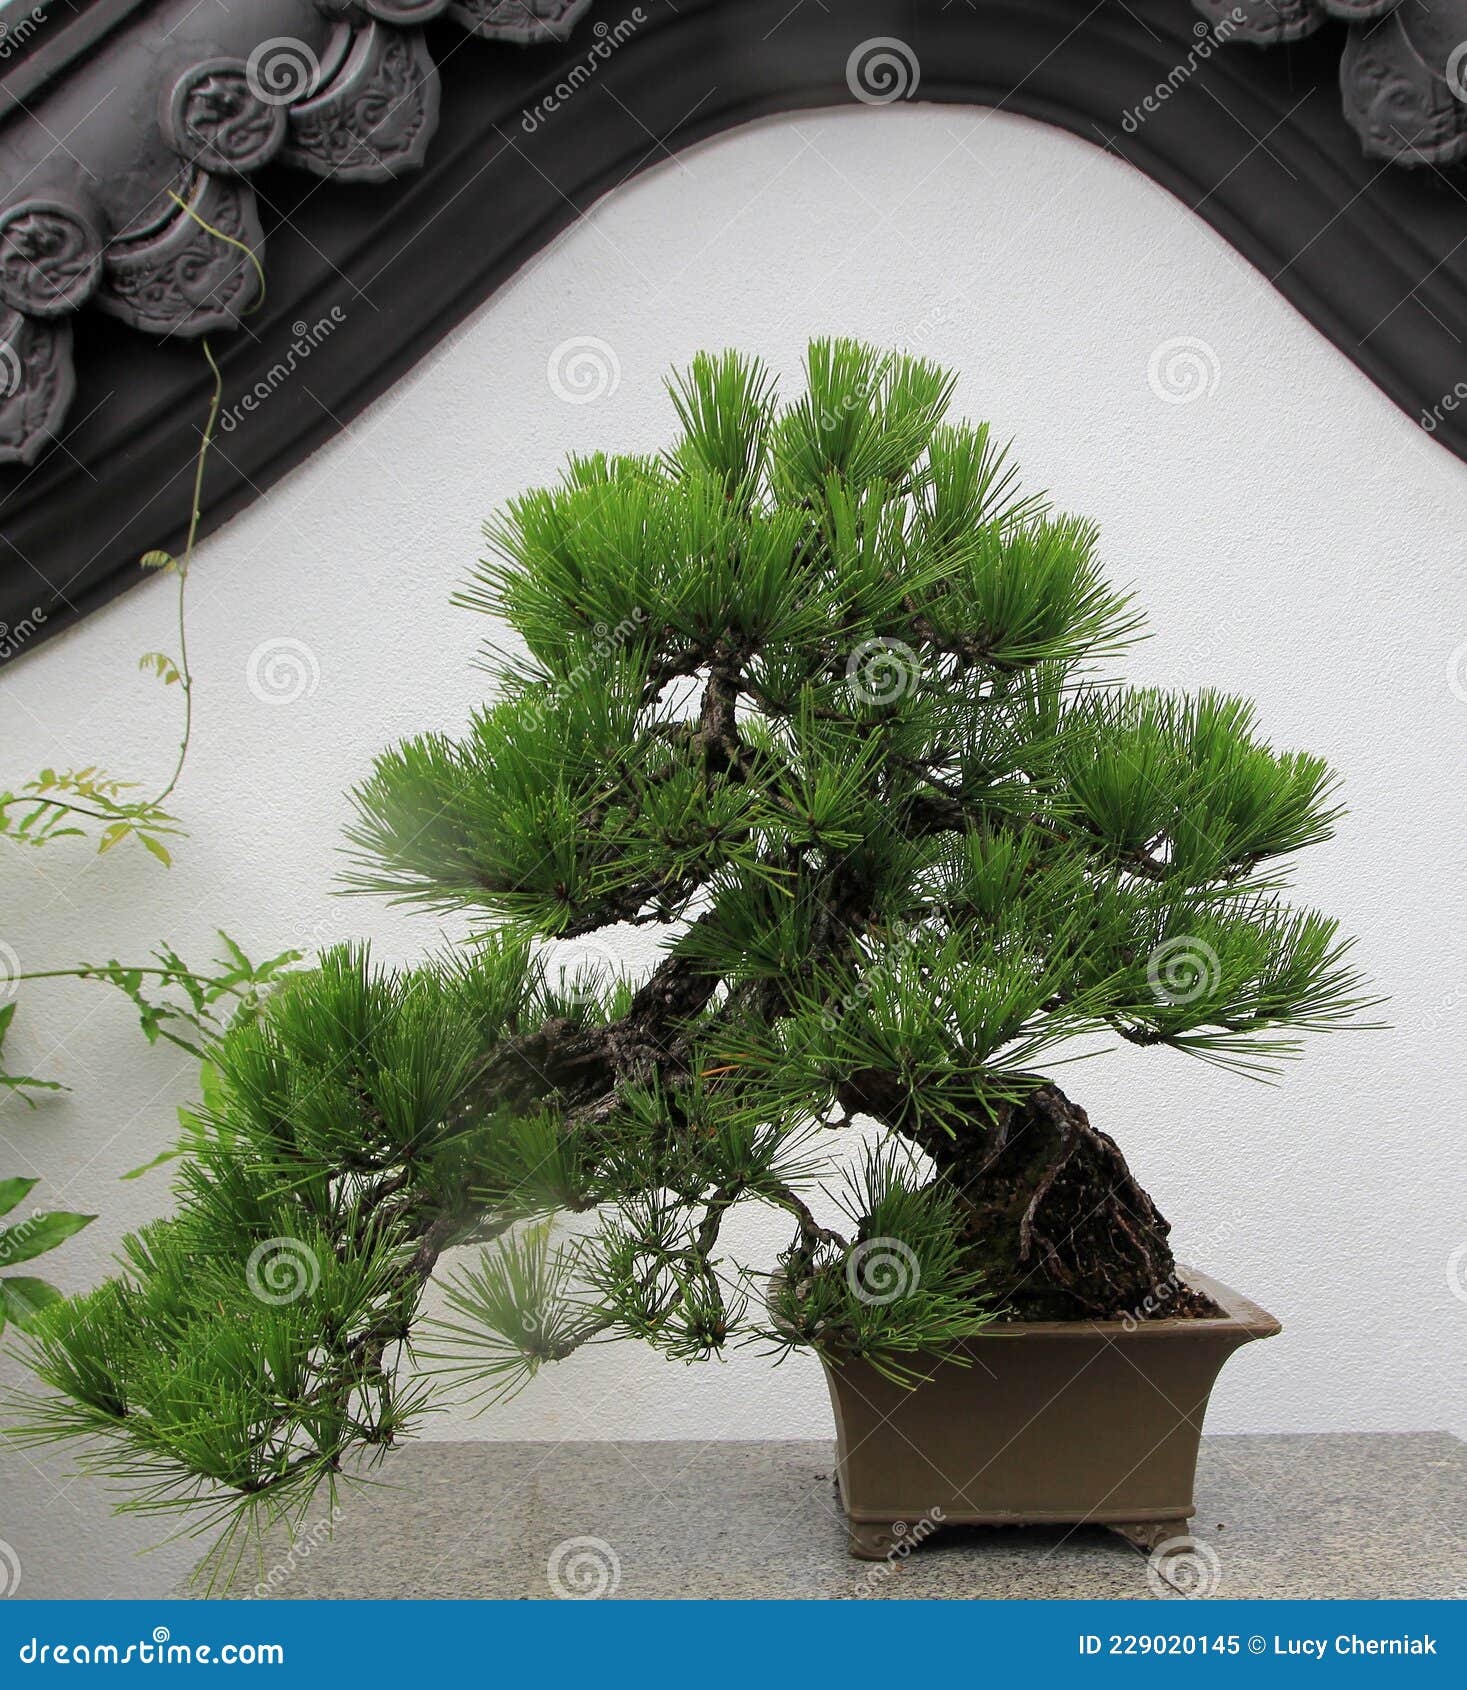 https://thumbs.dreamstime.com/z/small-decorative-tree-banzai-pot-229020145.jpg